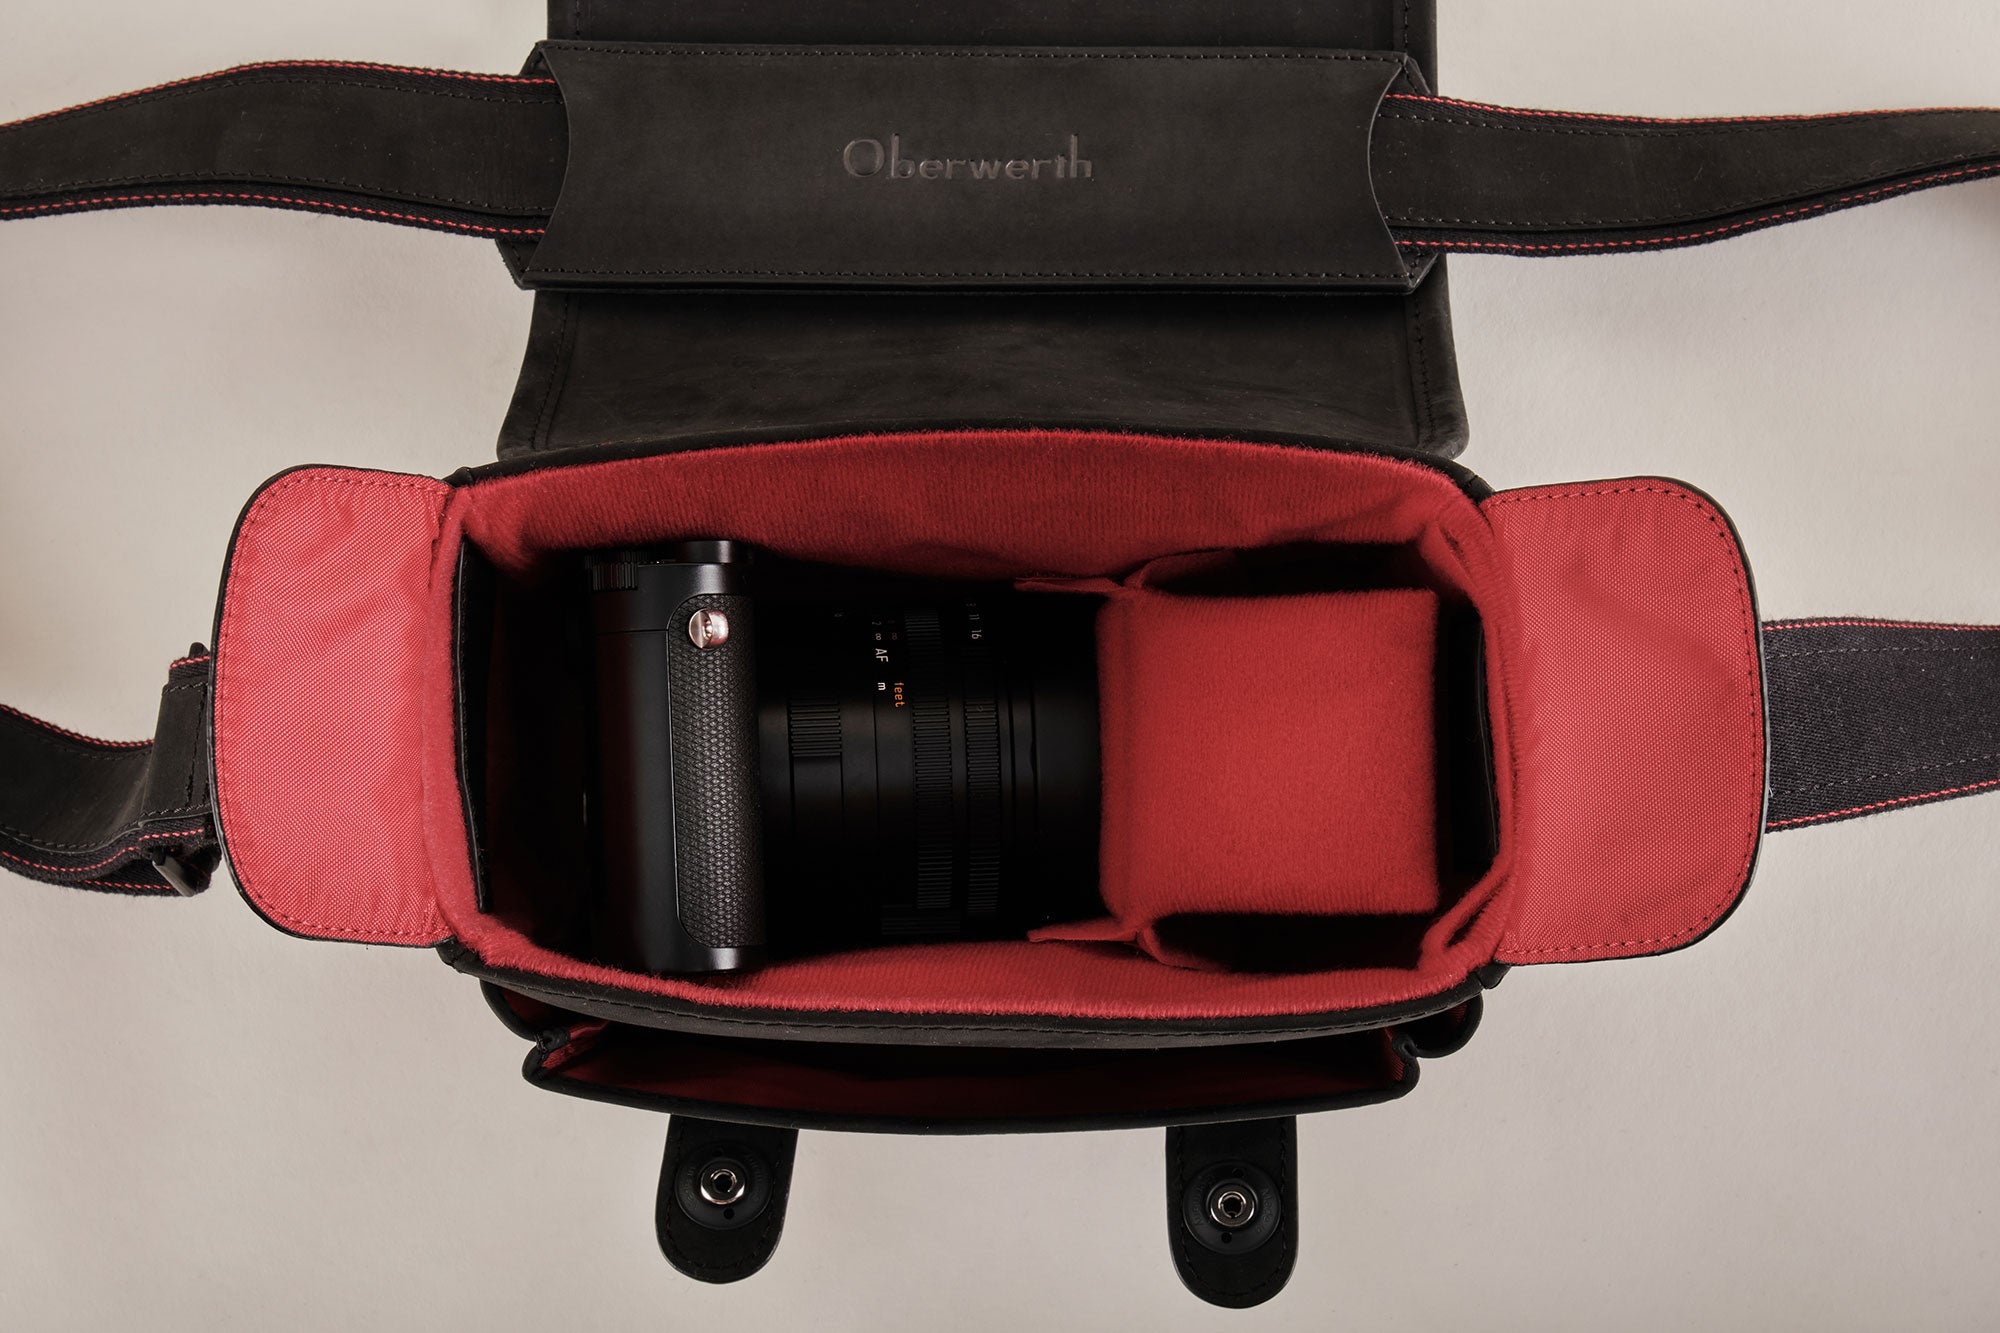 The Q Bag - Leica Q3 Bag